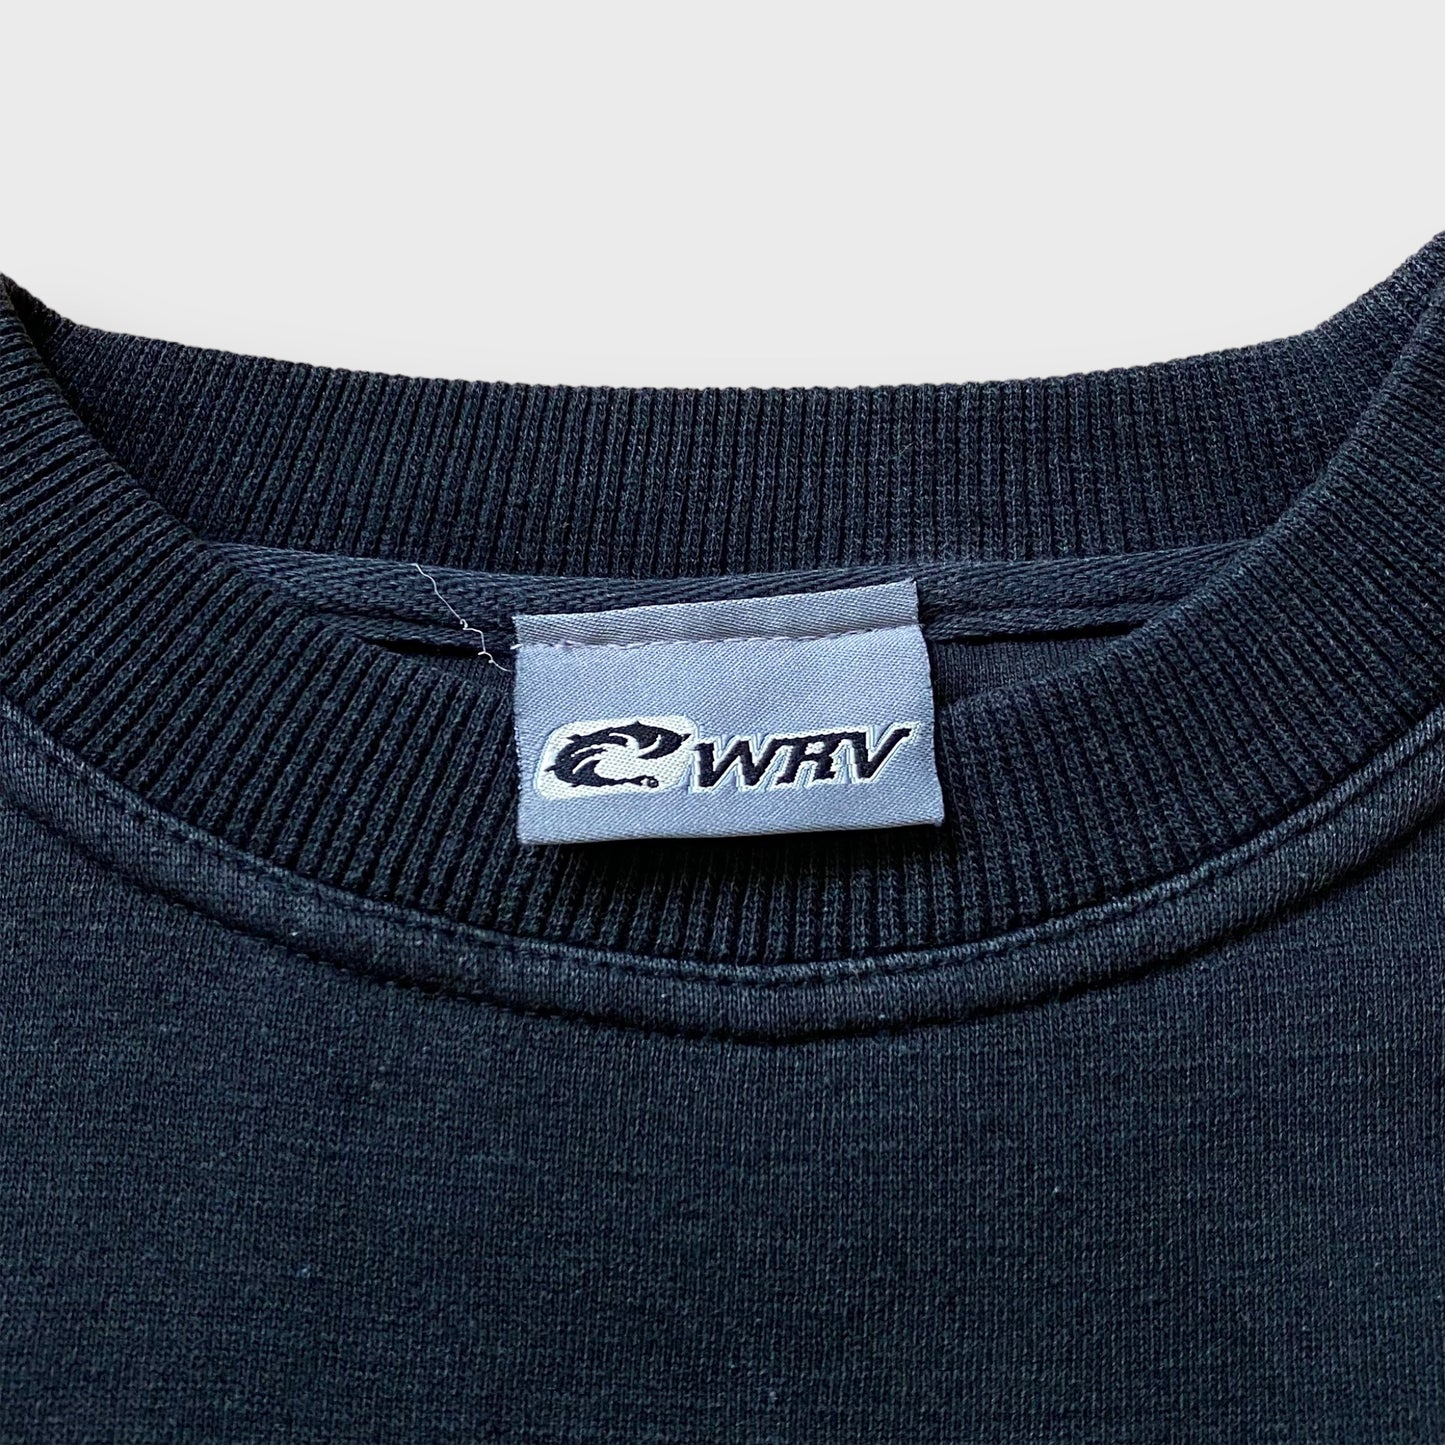 "WRV" Logo design sweat